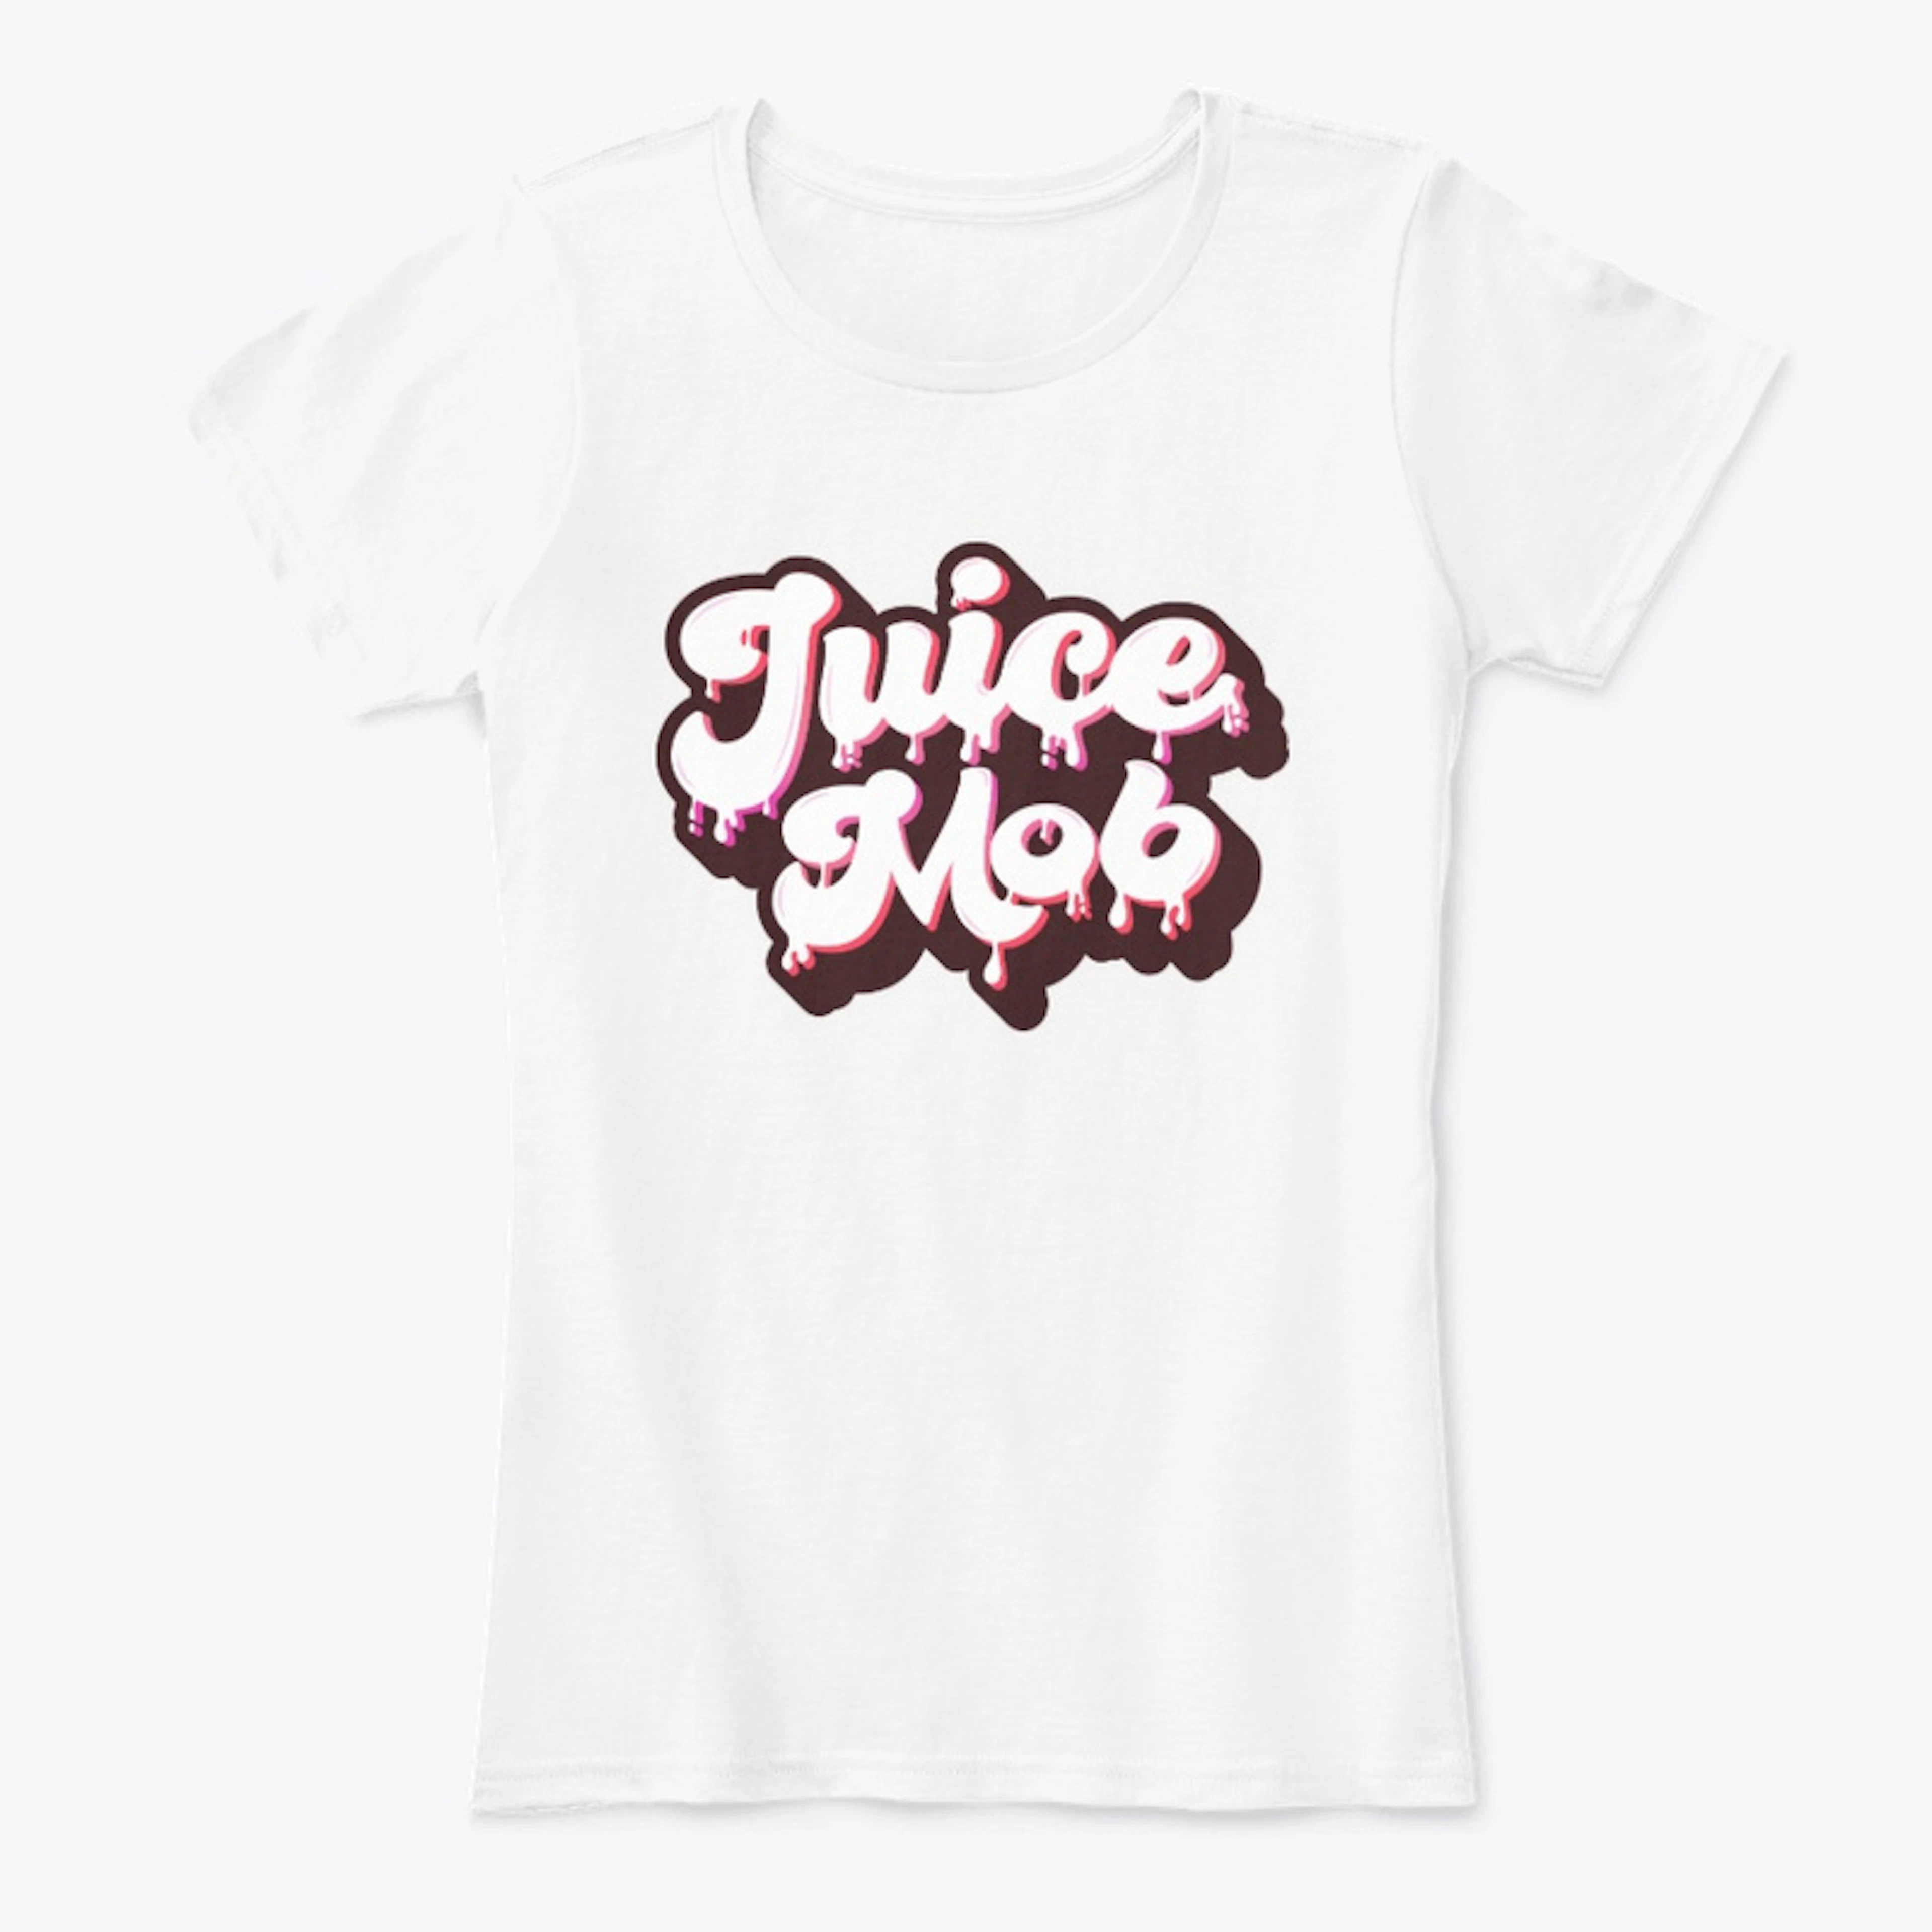 Juice Mob Logo